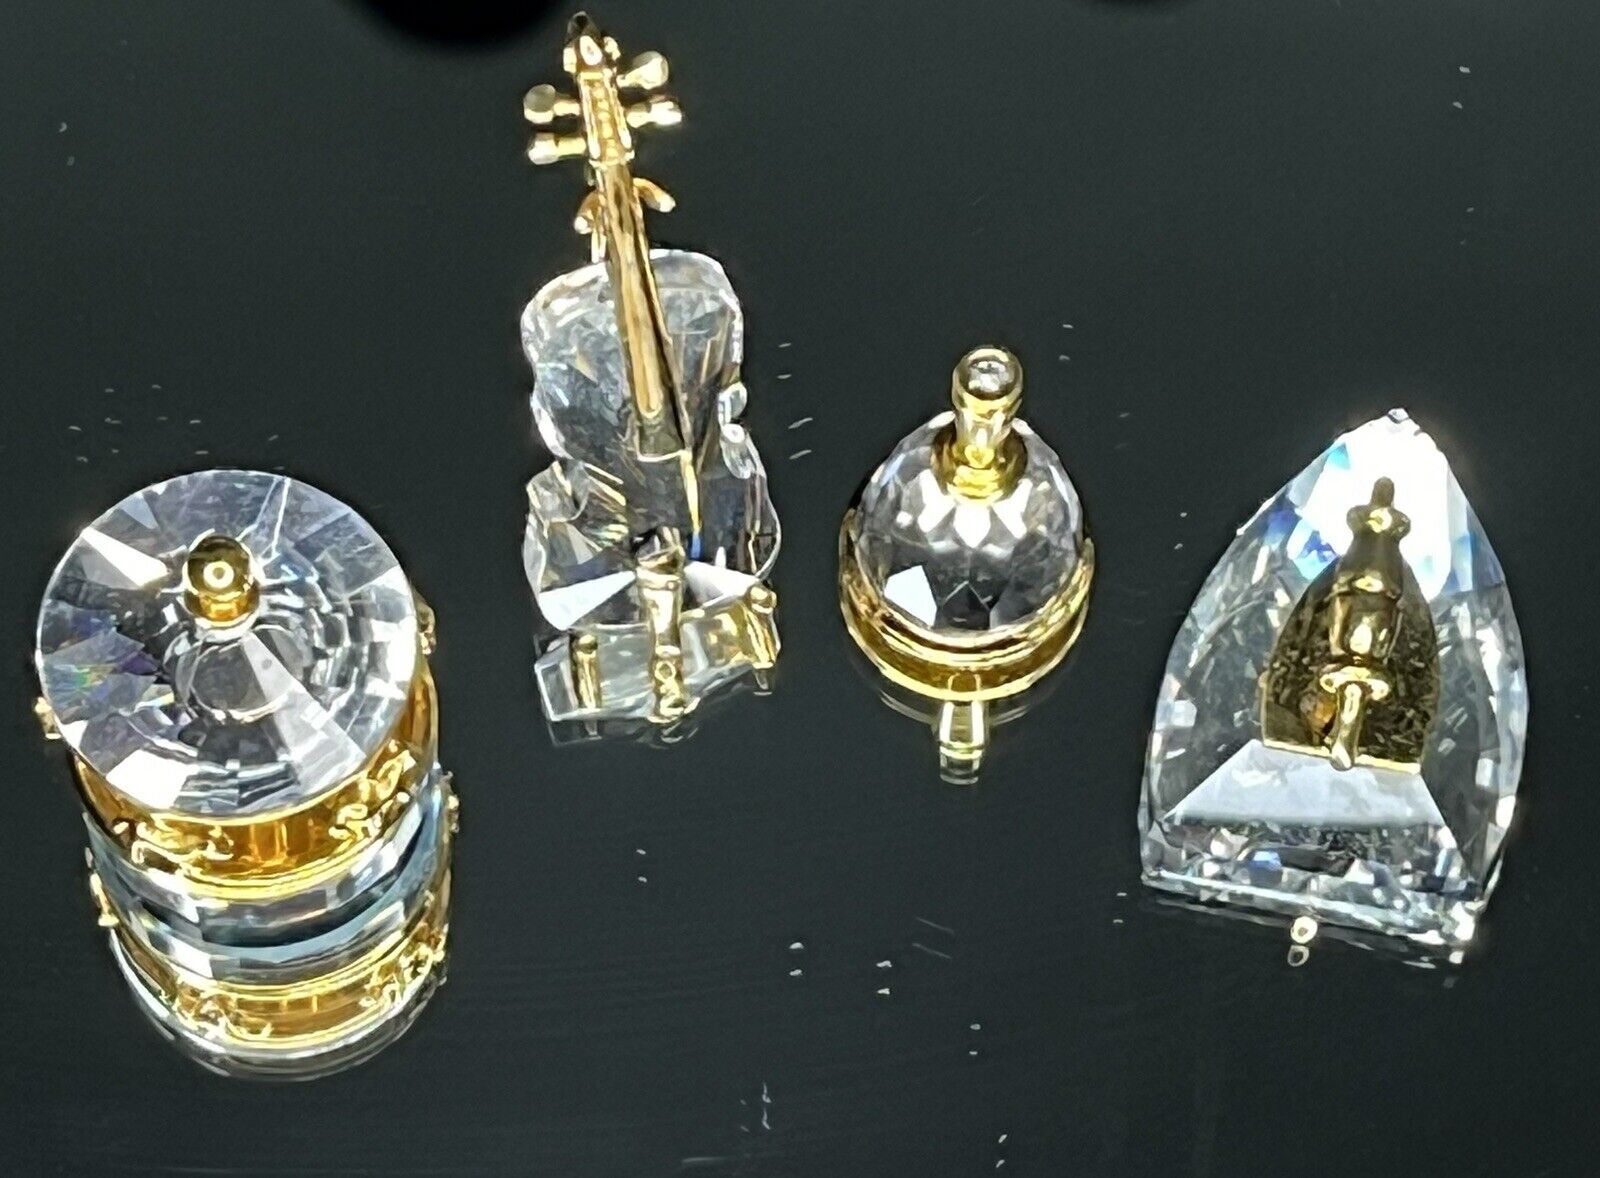 Swarovski Crystal Memories Miniatures 4pc Lot MIB Violin carousel Bell & Iron